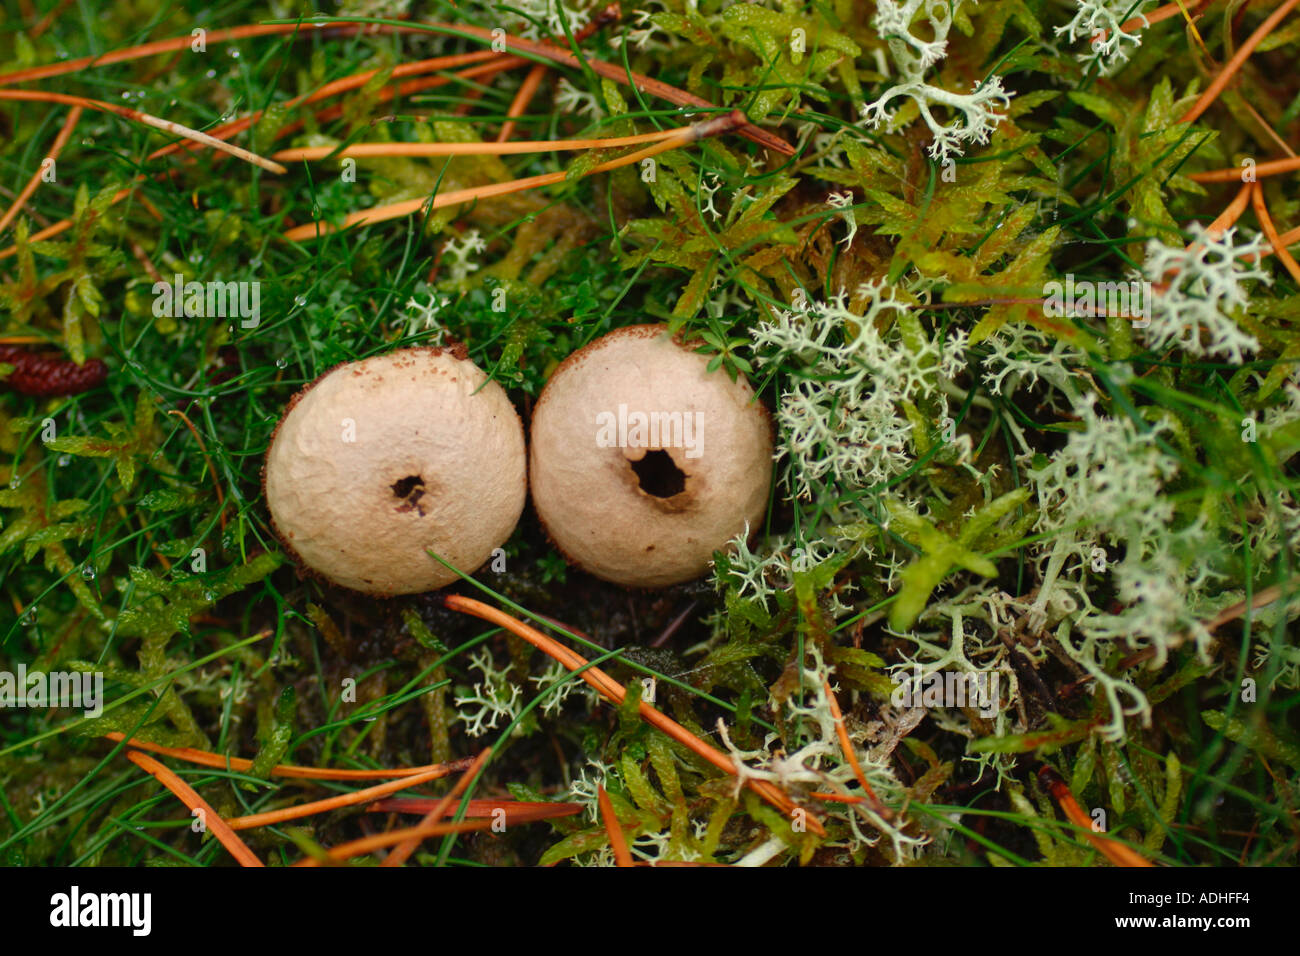 Common Puffballs fungi Lycoperdon Perlatum growing in moss and lichen in woodland Shropshire England UK GB British Isles Stock Photo